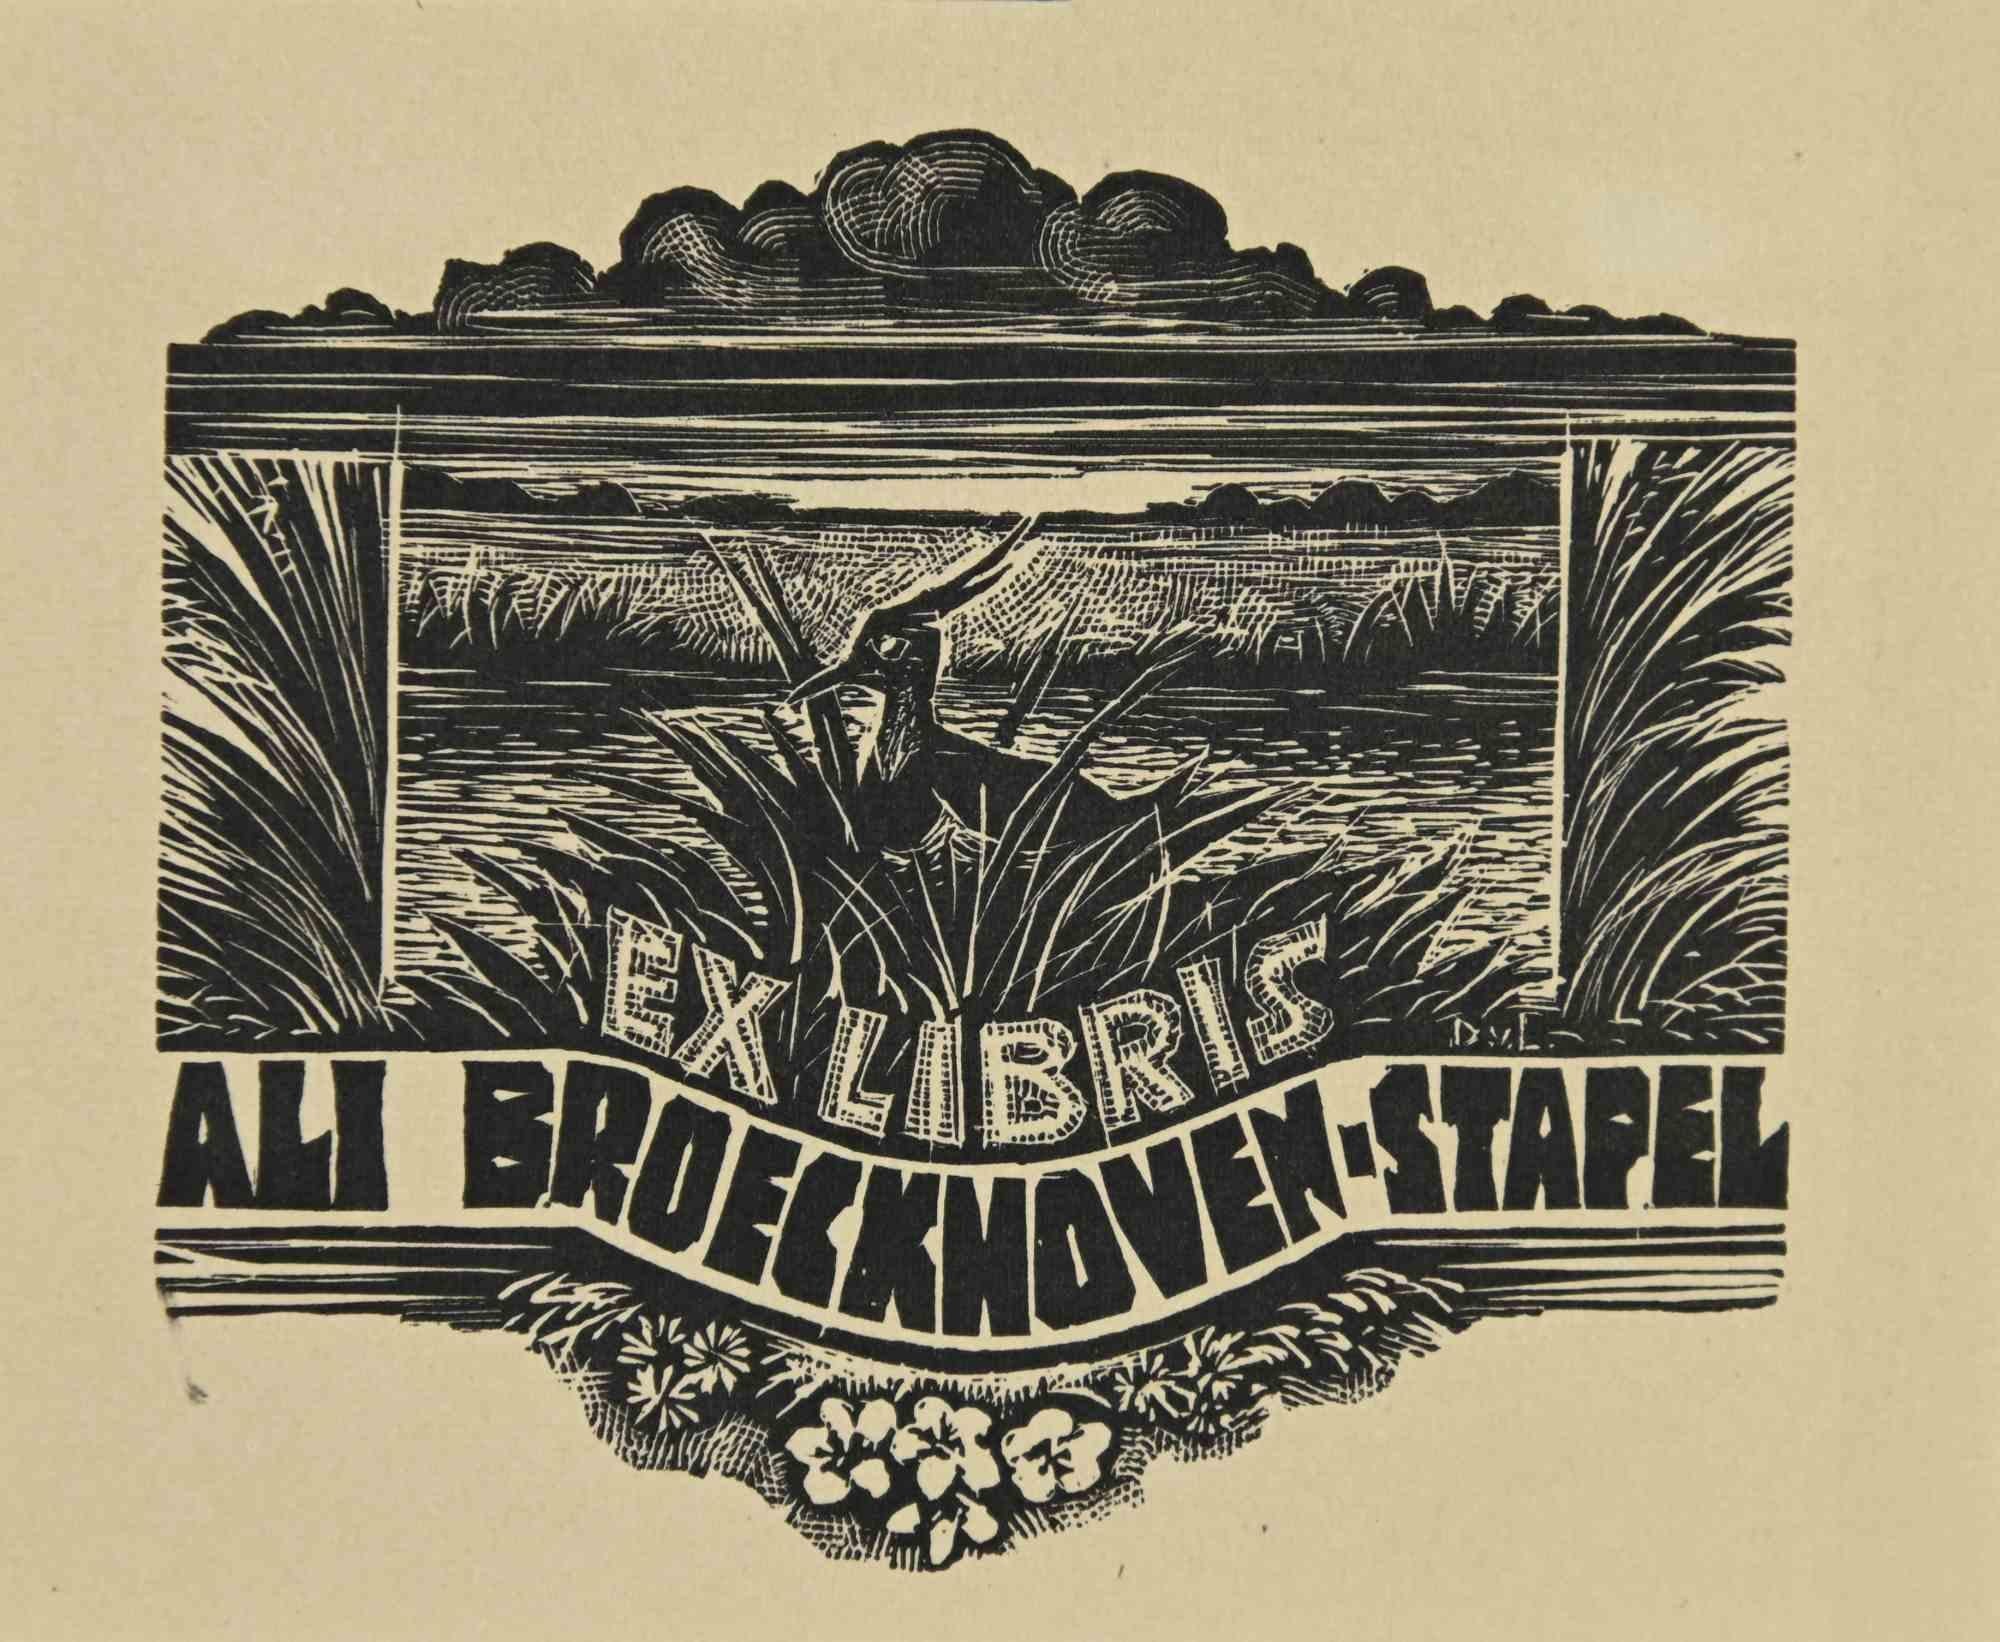 Ex libris - Ali Broecknoven - Stapel - Woodcut - 1939 - Art by Unknown